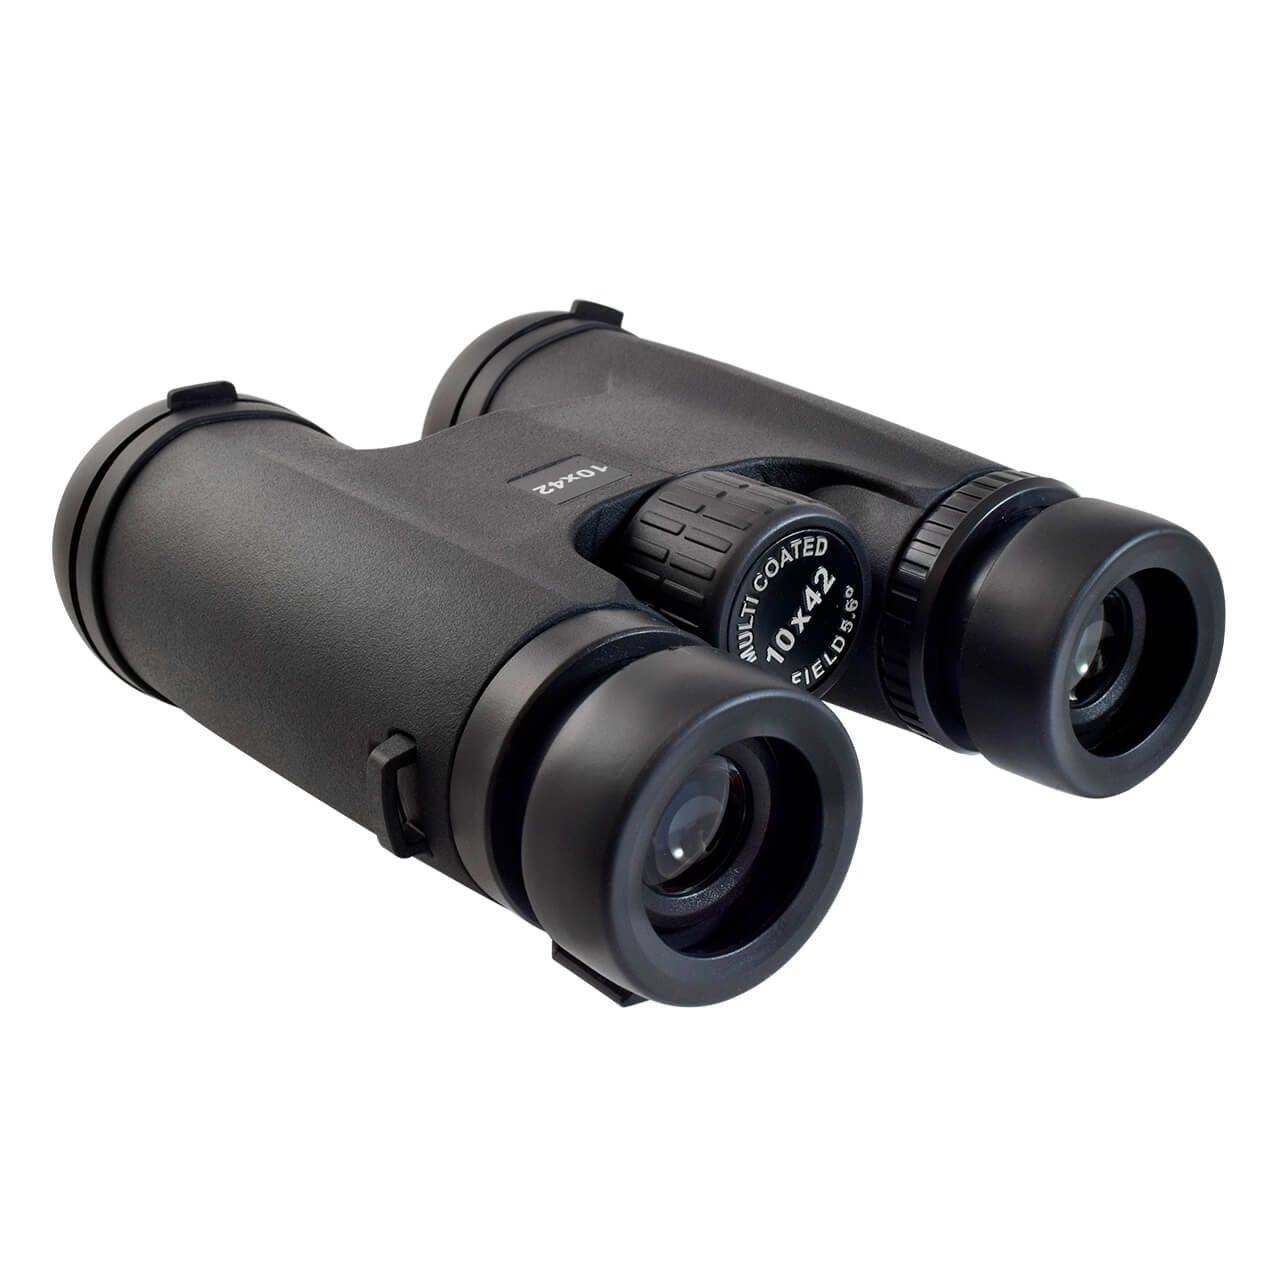 Binocular 10 x 42 mm water resistant con adaptador para celular